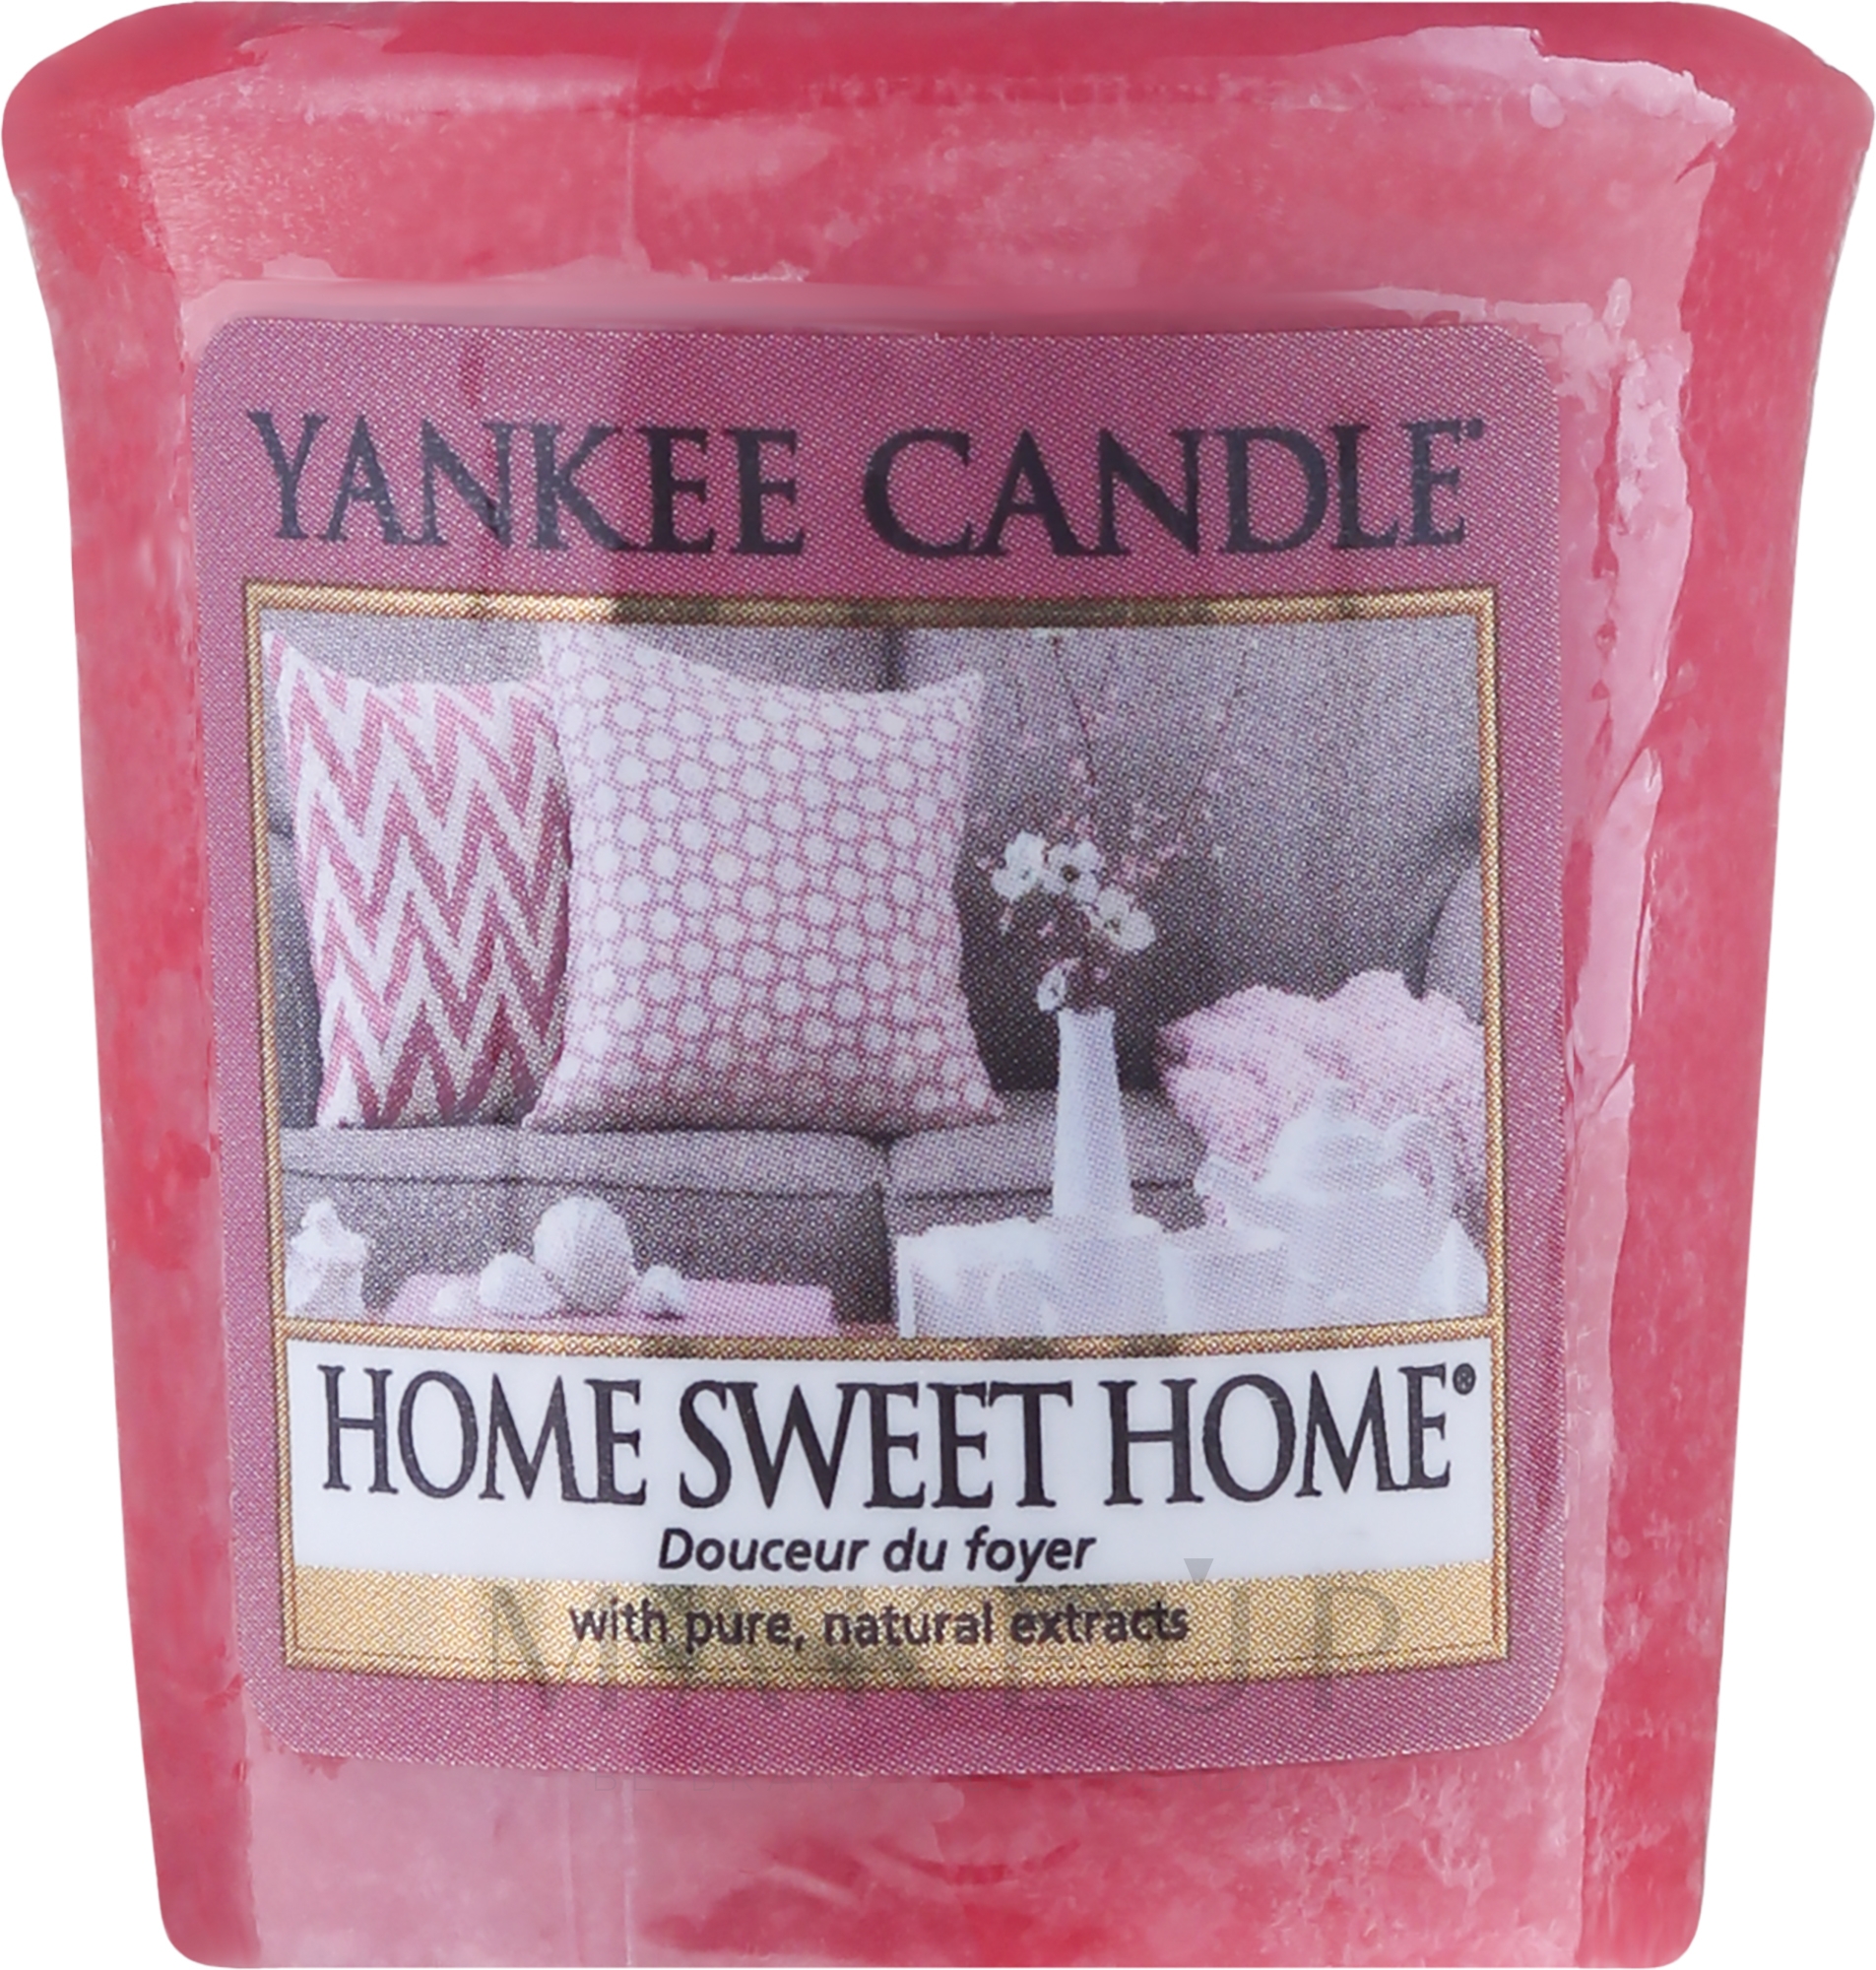 Votivkerze Home Sweet Home - Yankee Candle Home Sweet Home Sampler Votive — Foto 49 g